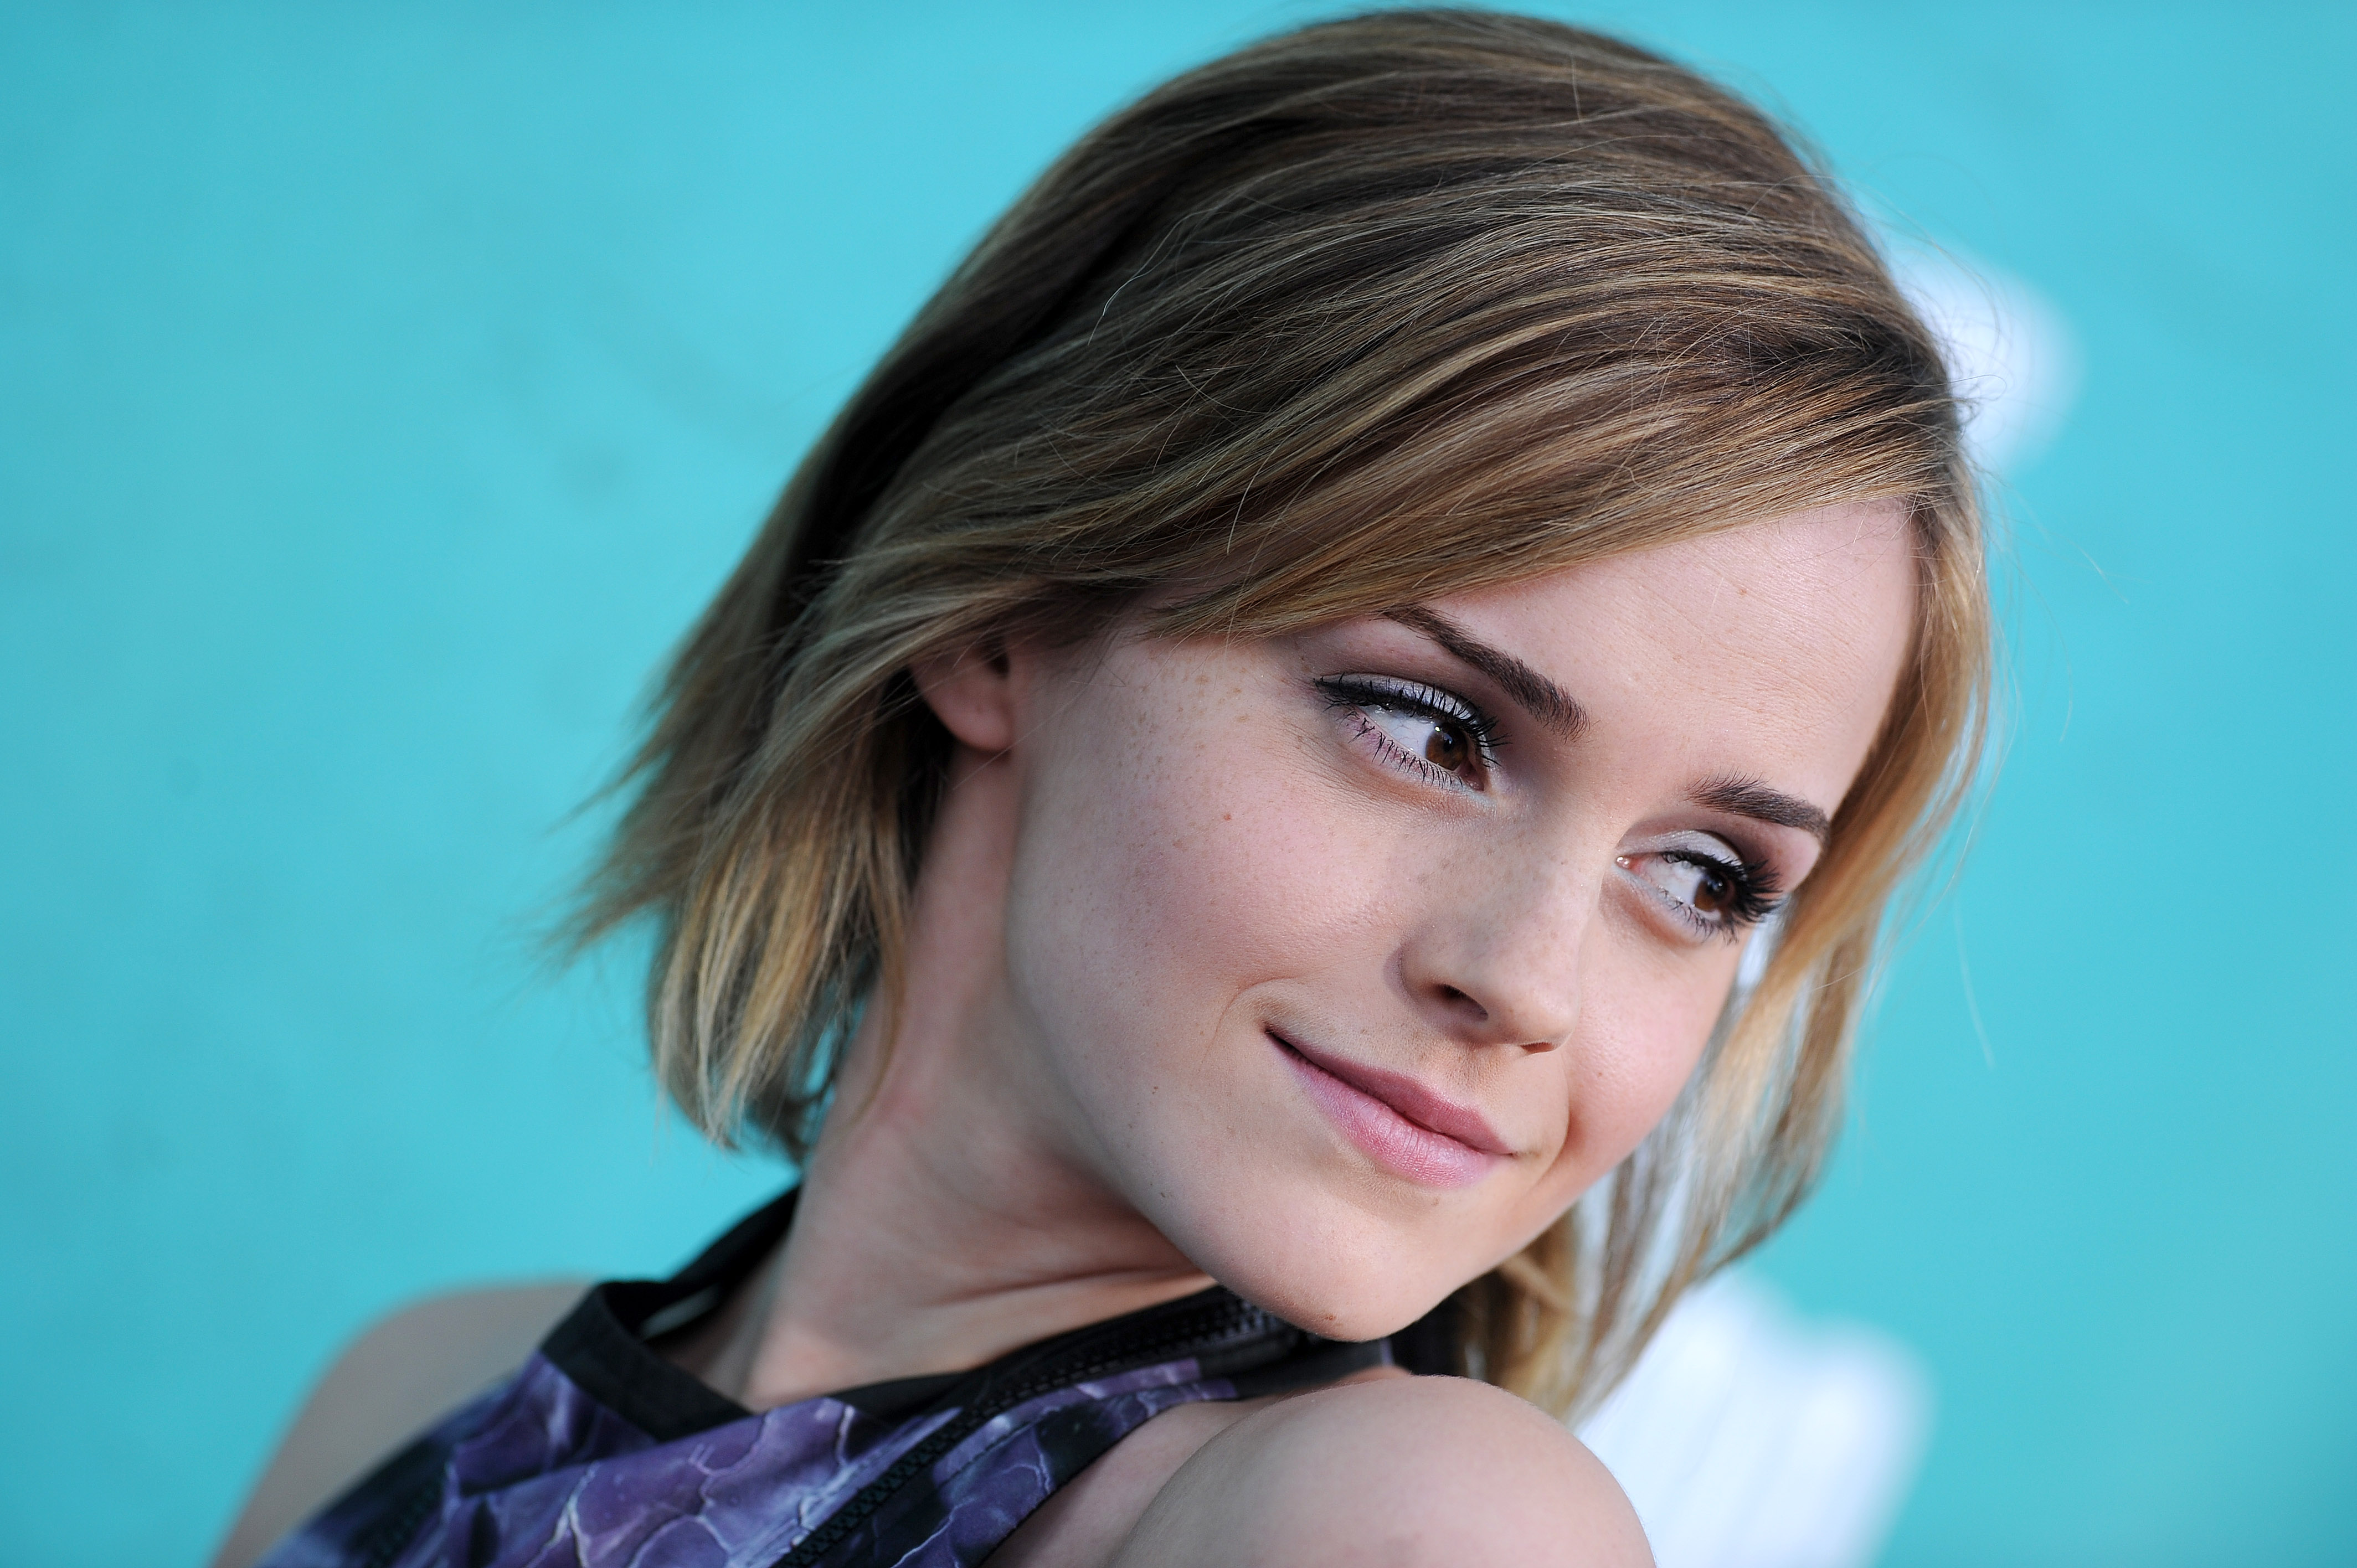 Emma Watson Backgrounds, Compatible - PC, Mobile, Gadgets| 4256x2832 px